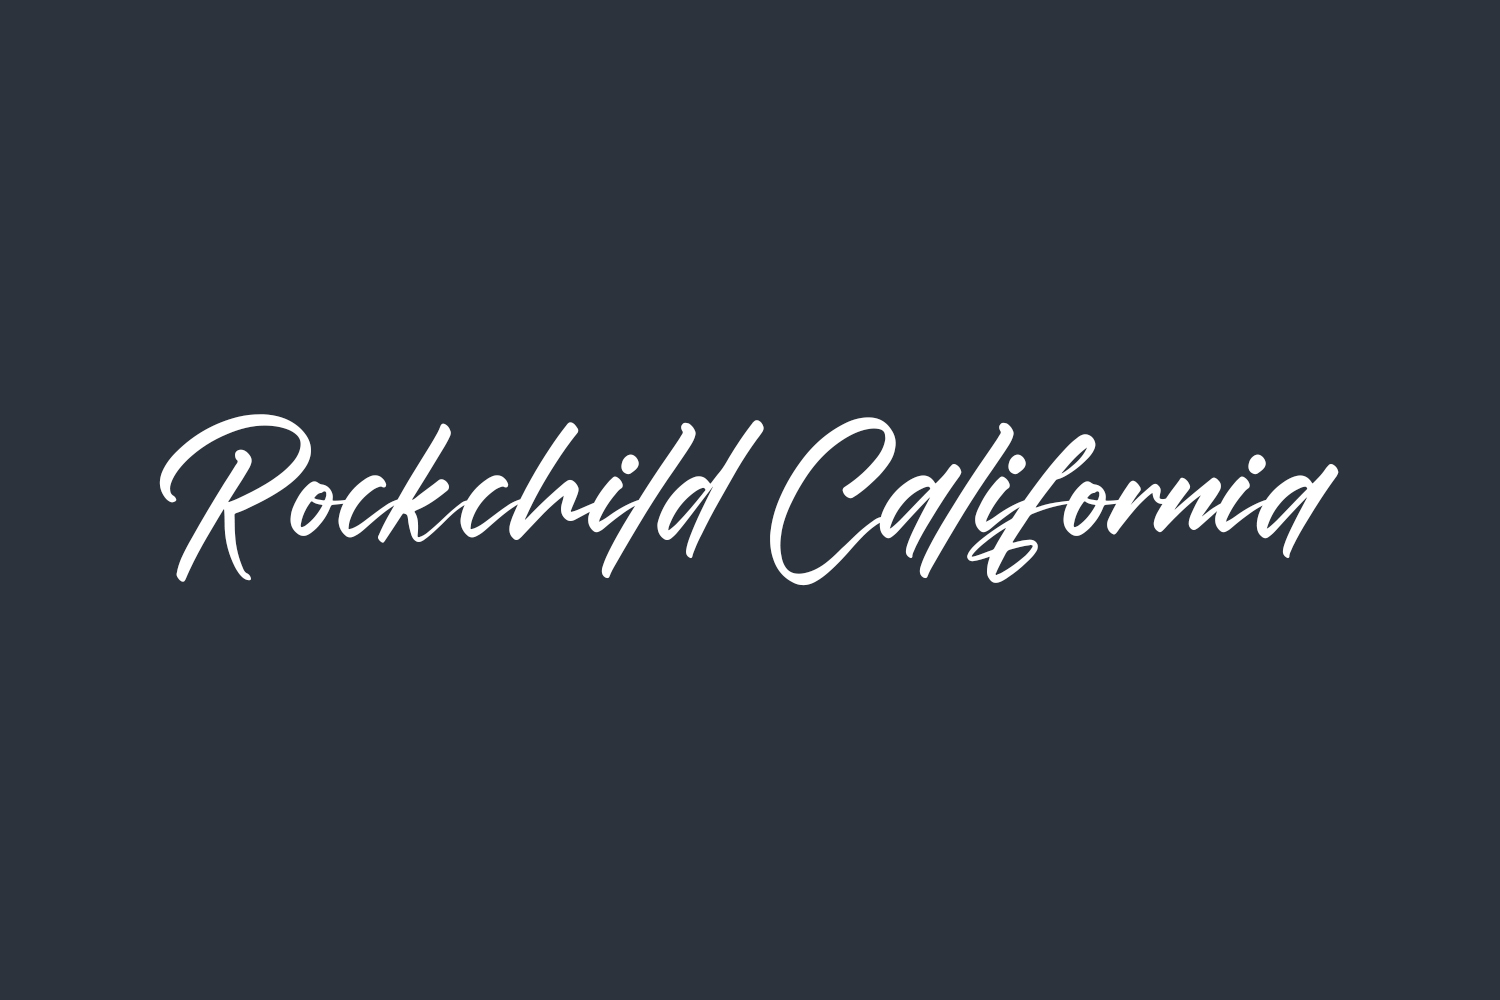 Rockchild California Free Font